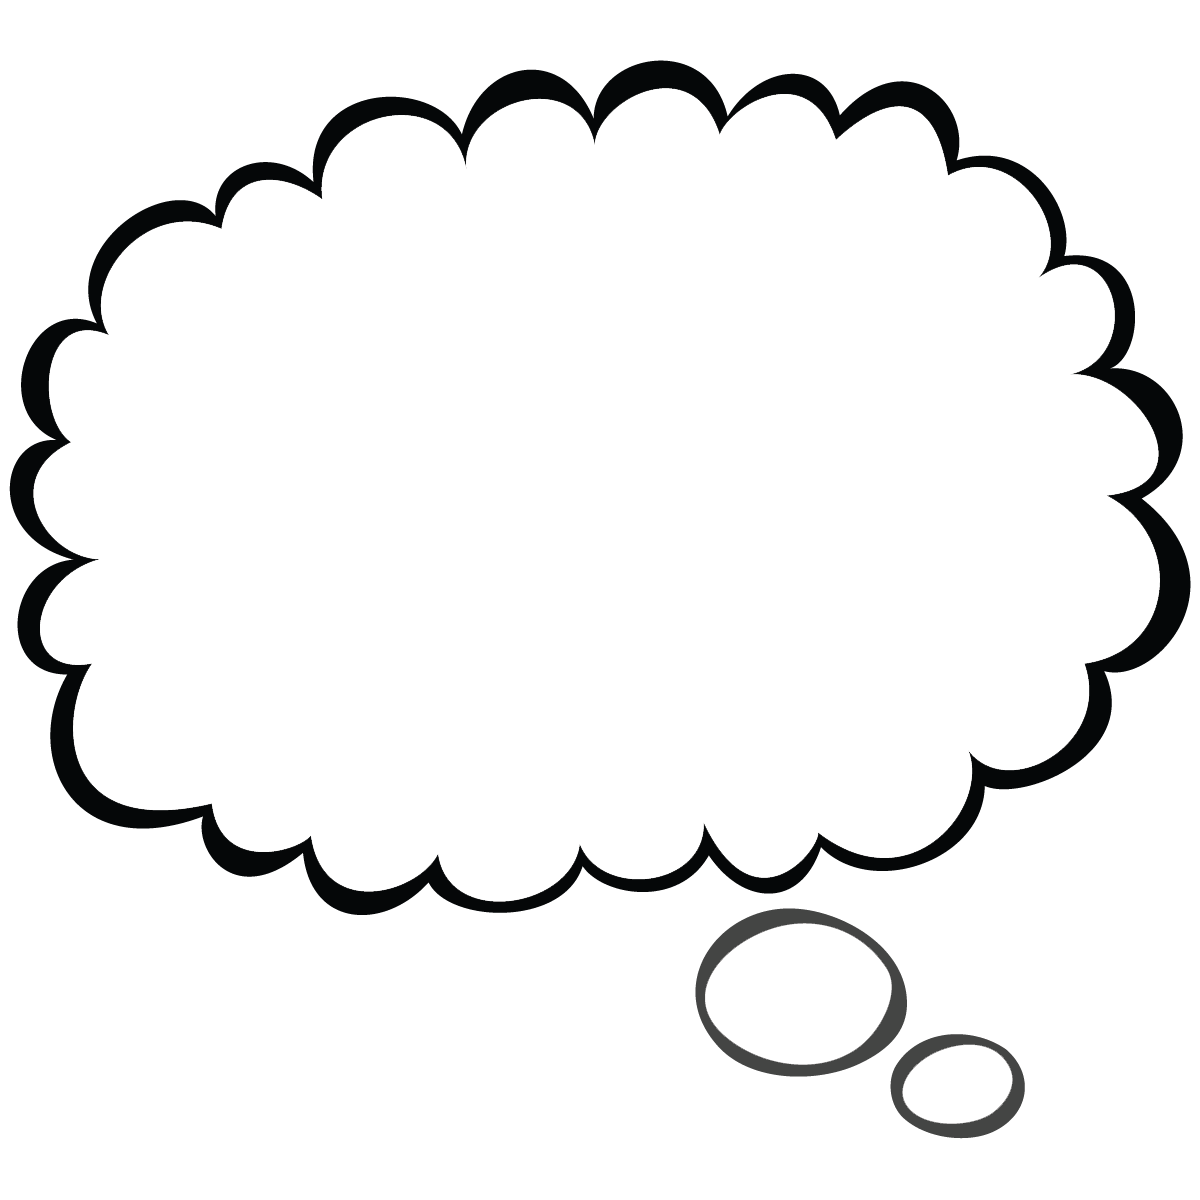 Thought bubble thought cloud clip art at vector clip art - Clipartix